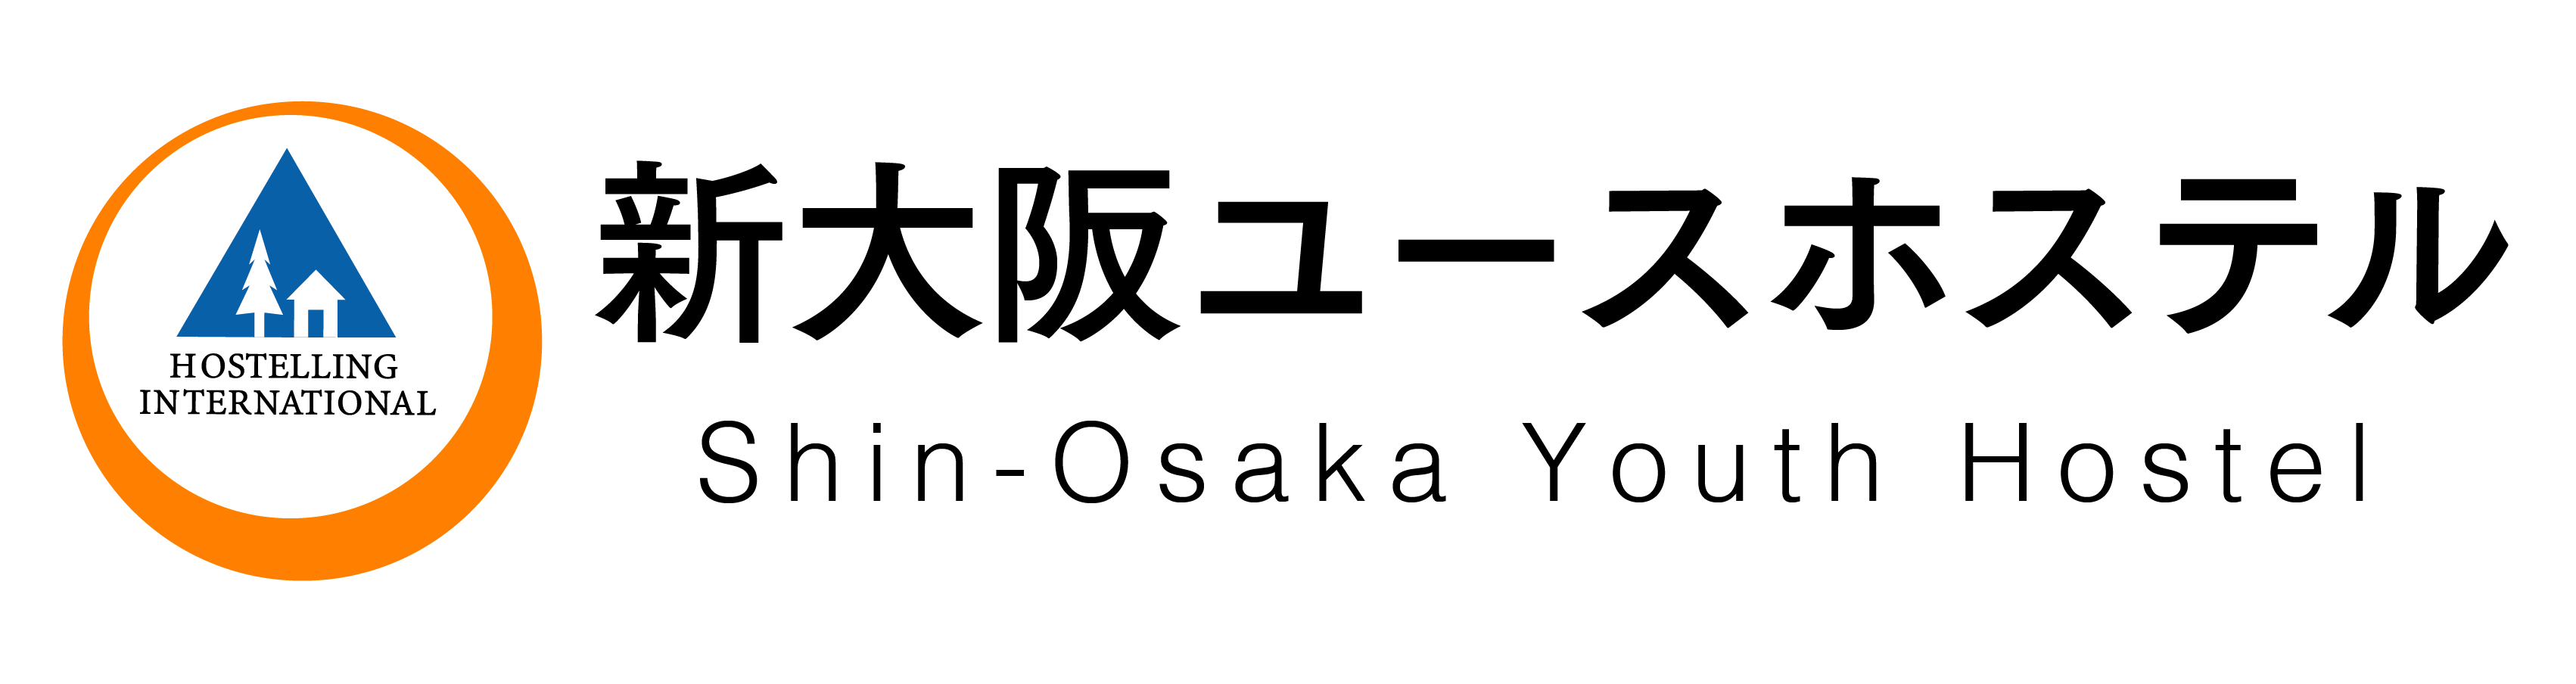 Shin-Osaka Youth Hostel【公式】